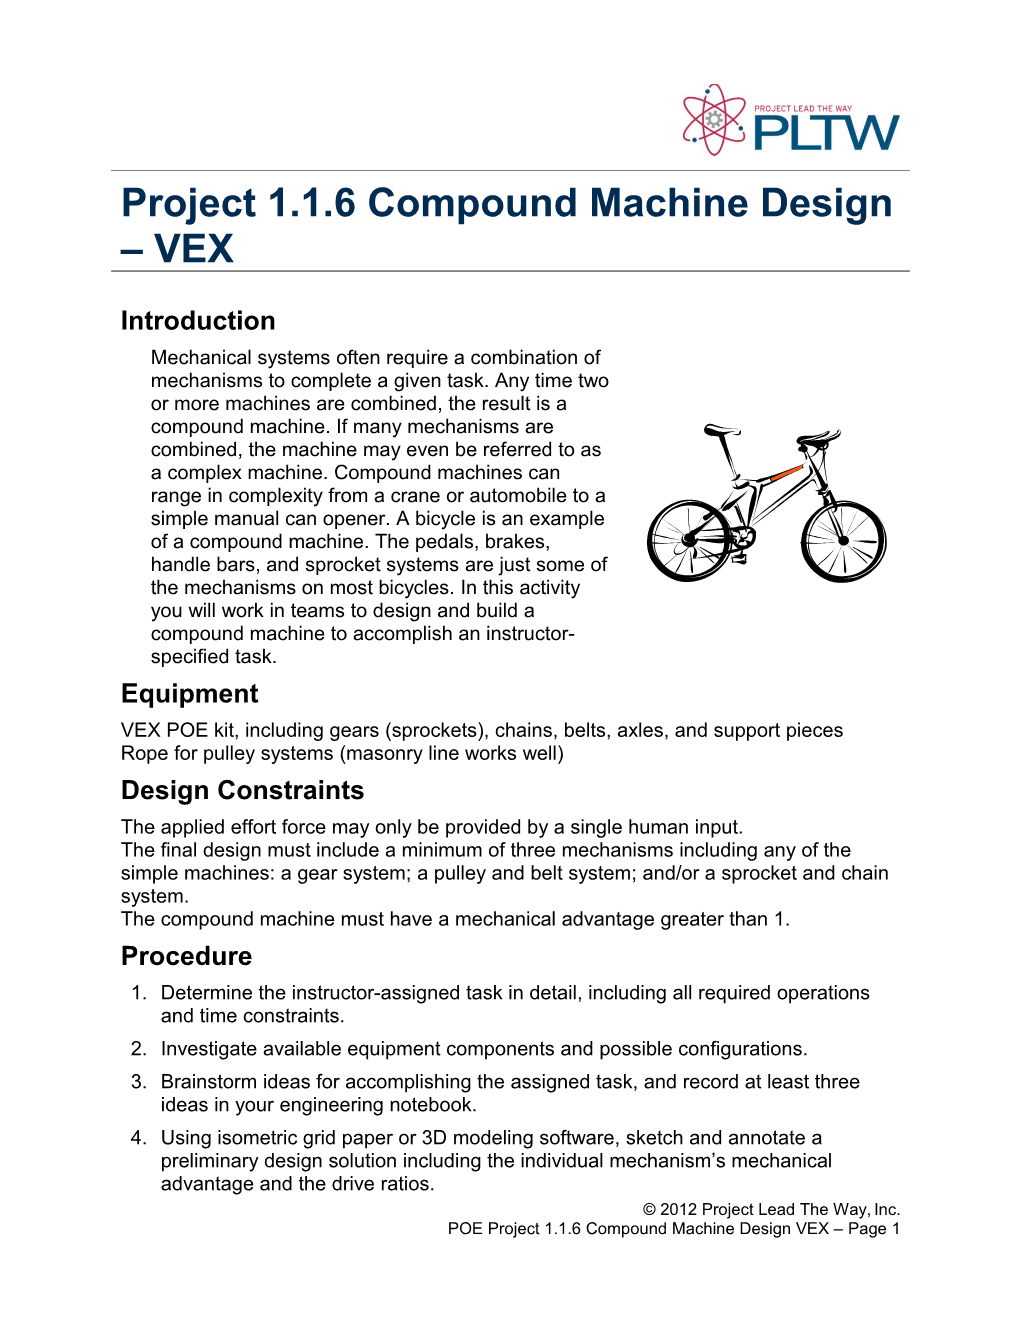 Project 1.1.6 Compound Machine Design VEX